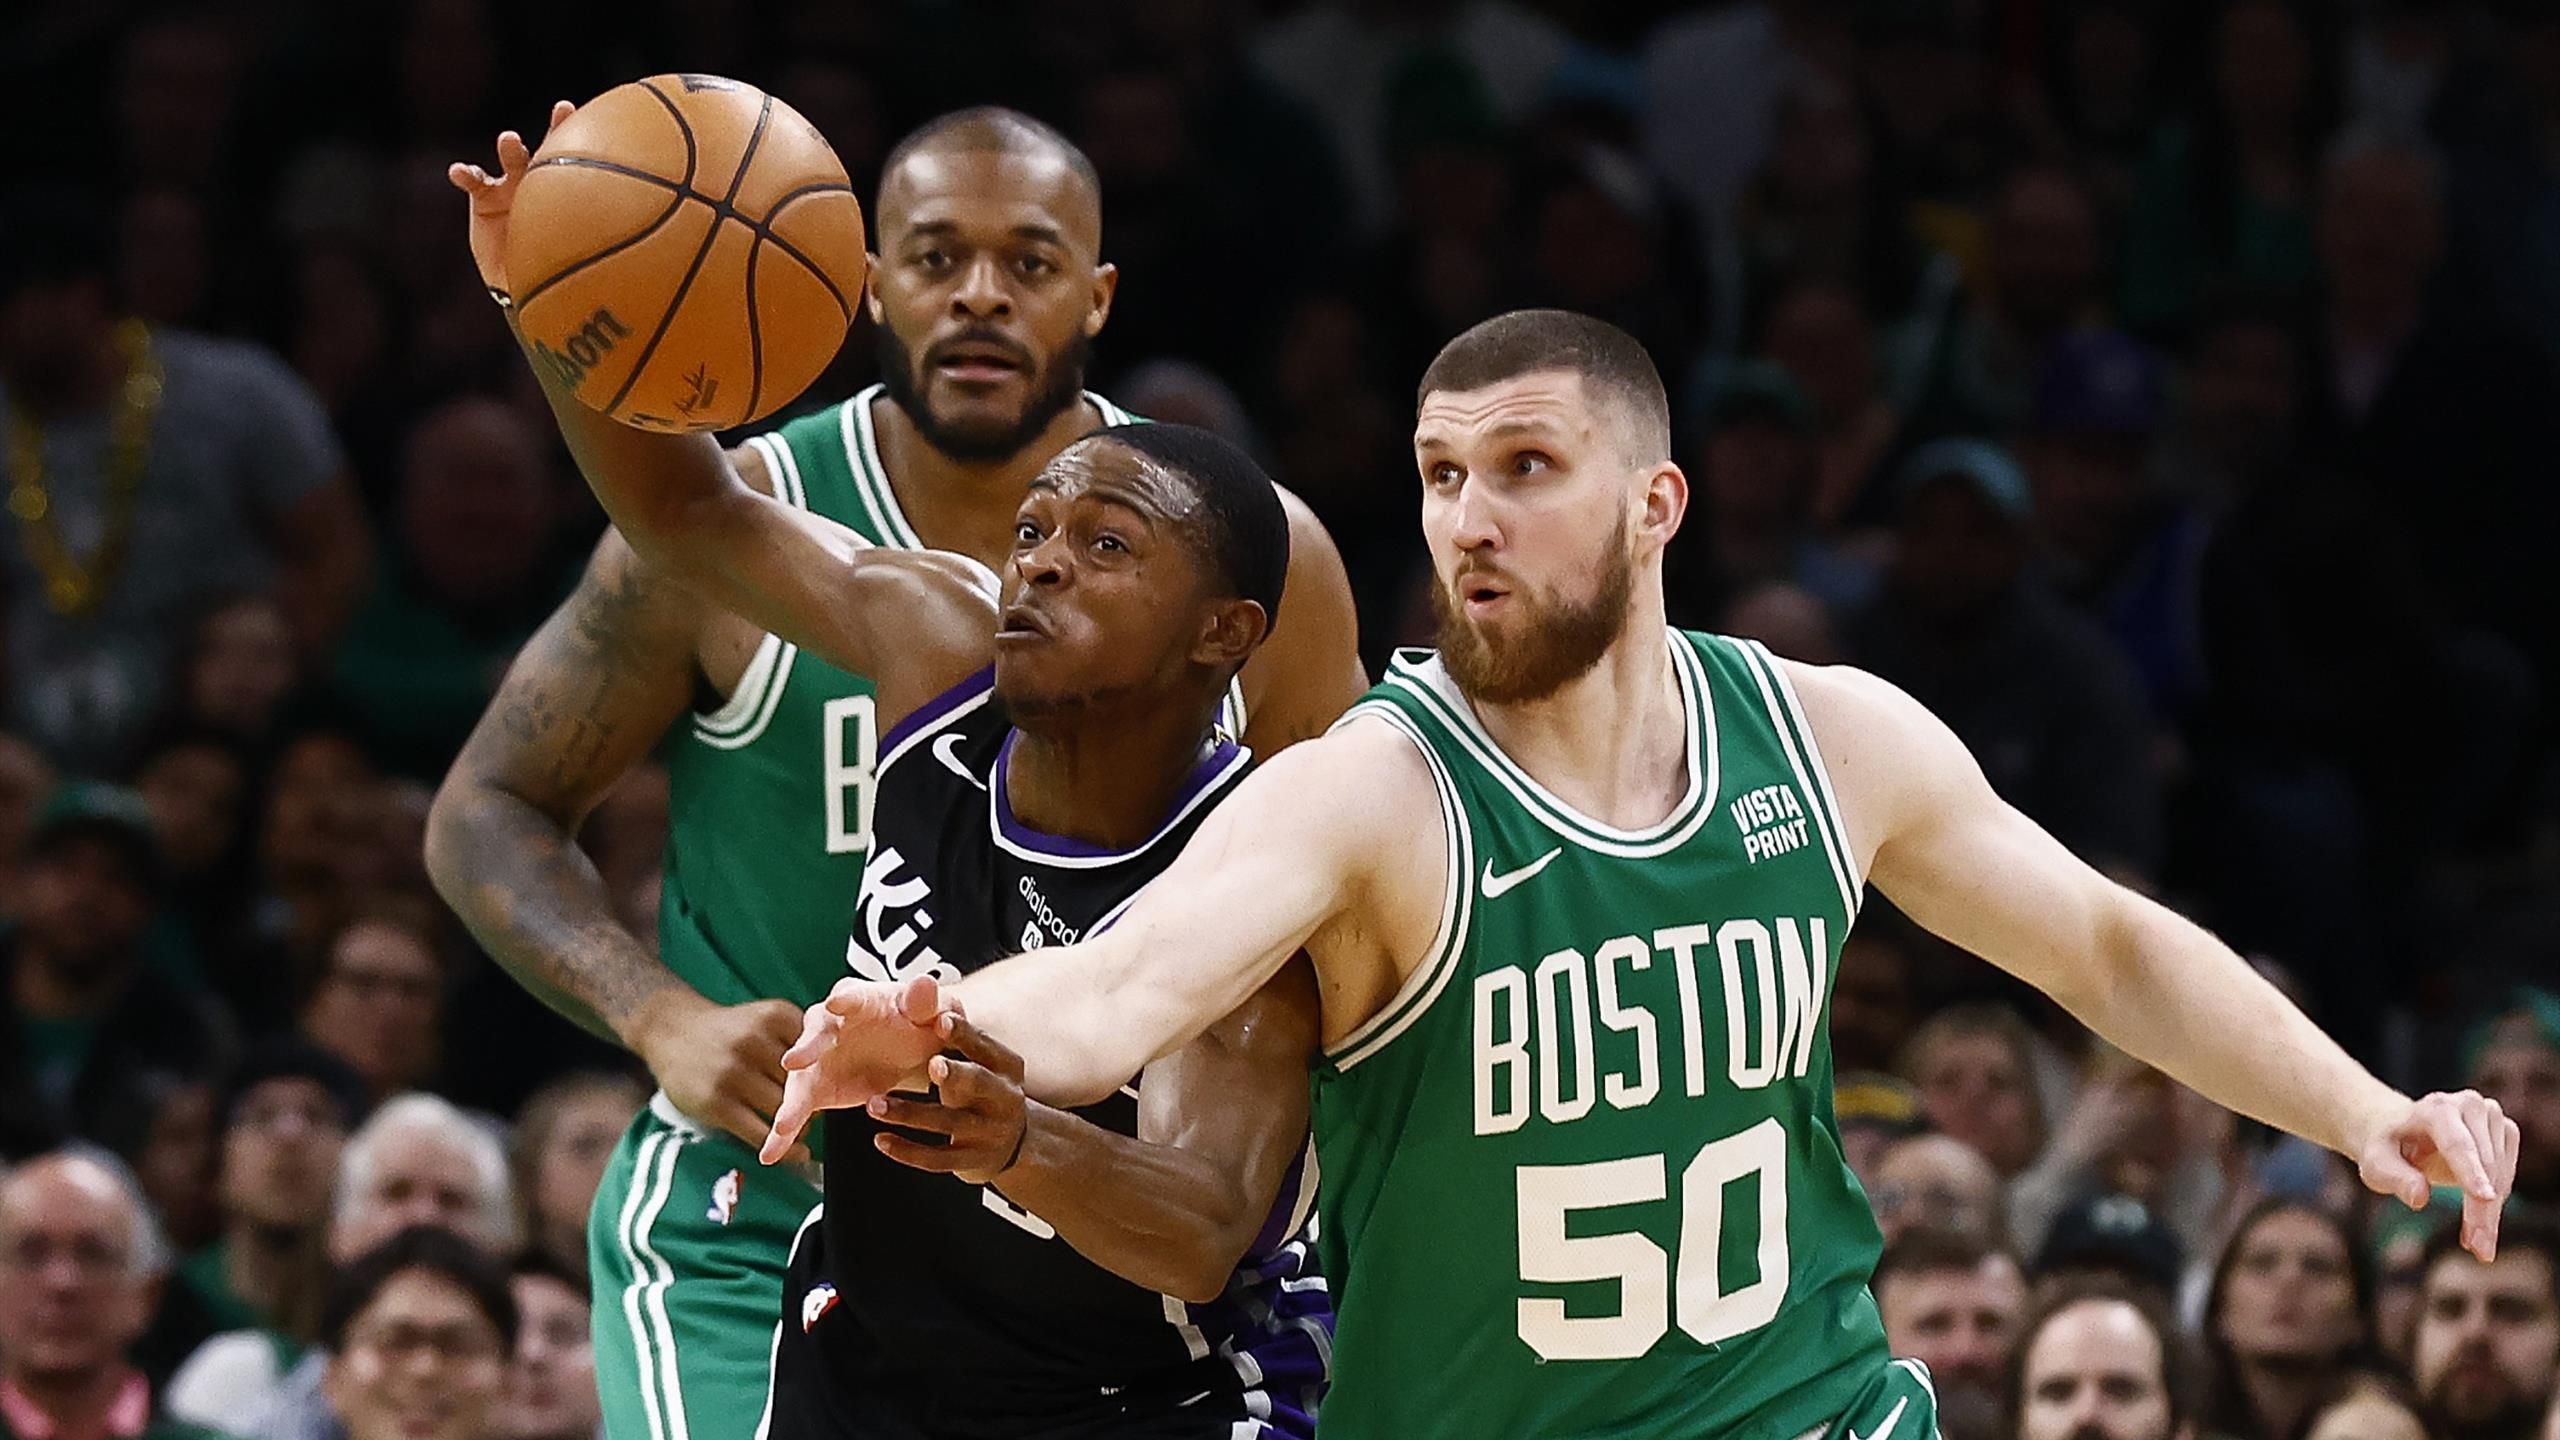 NBA: Boston Celtics overcome Sacramento Kings despite 'phenomenal' De'Aaron Fox, P.J. Washington stars for Mavericks - Eurosport